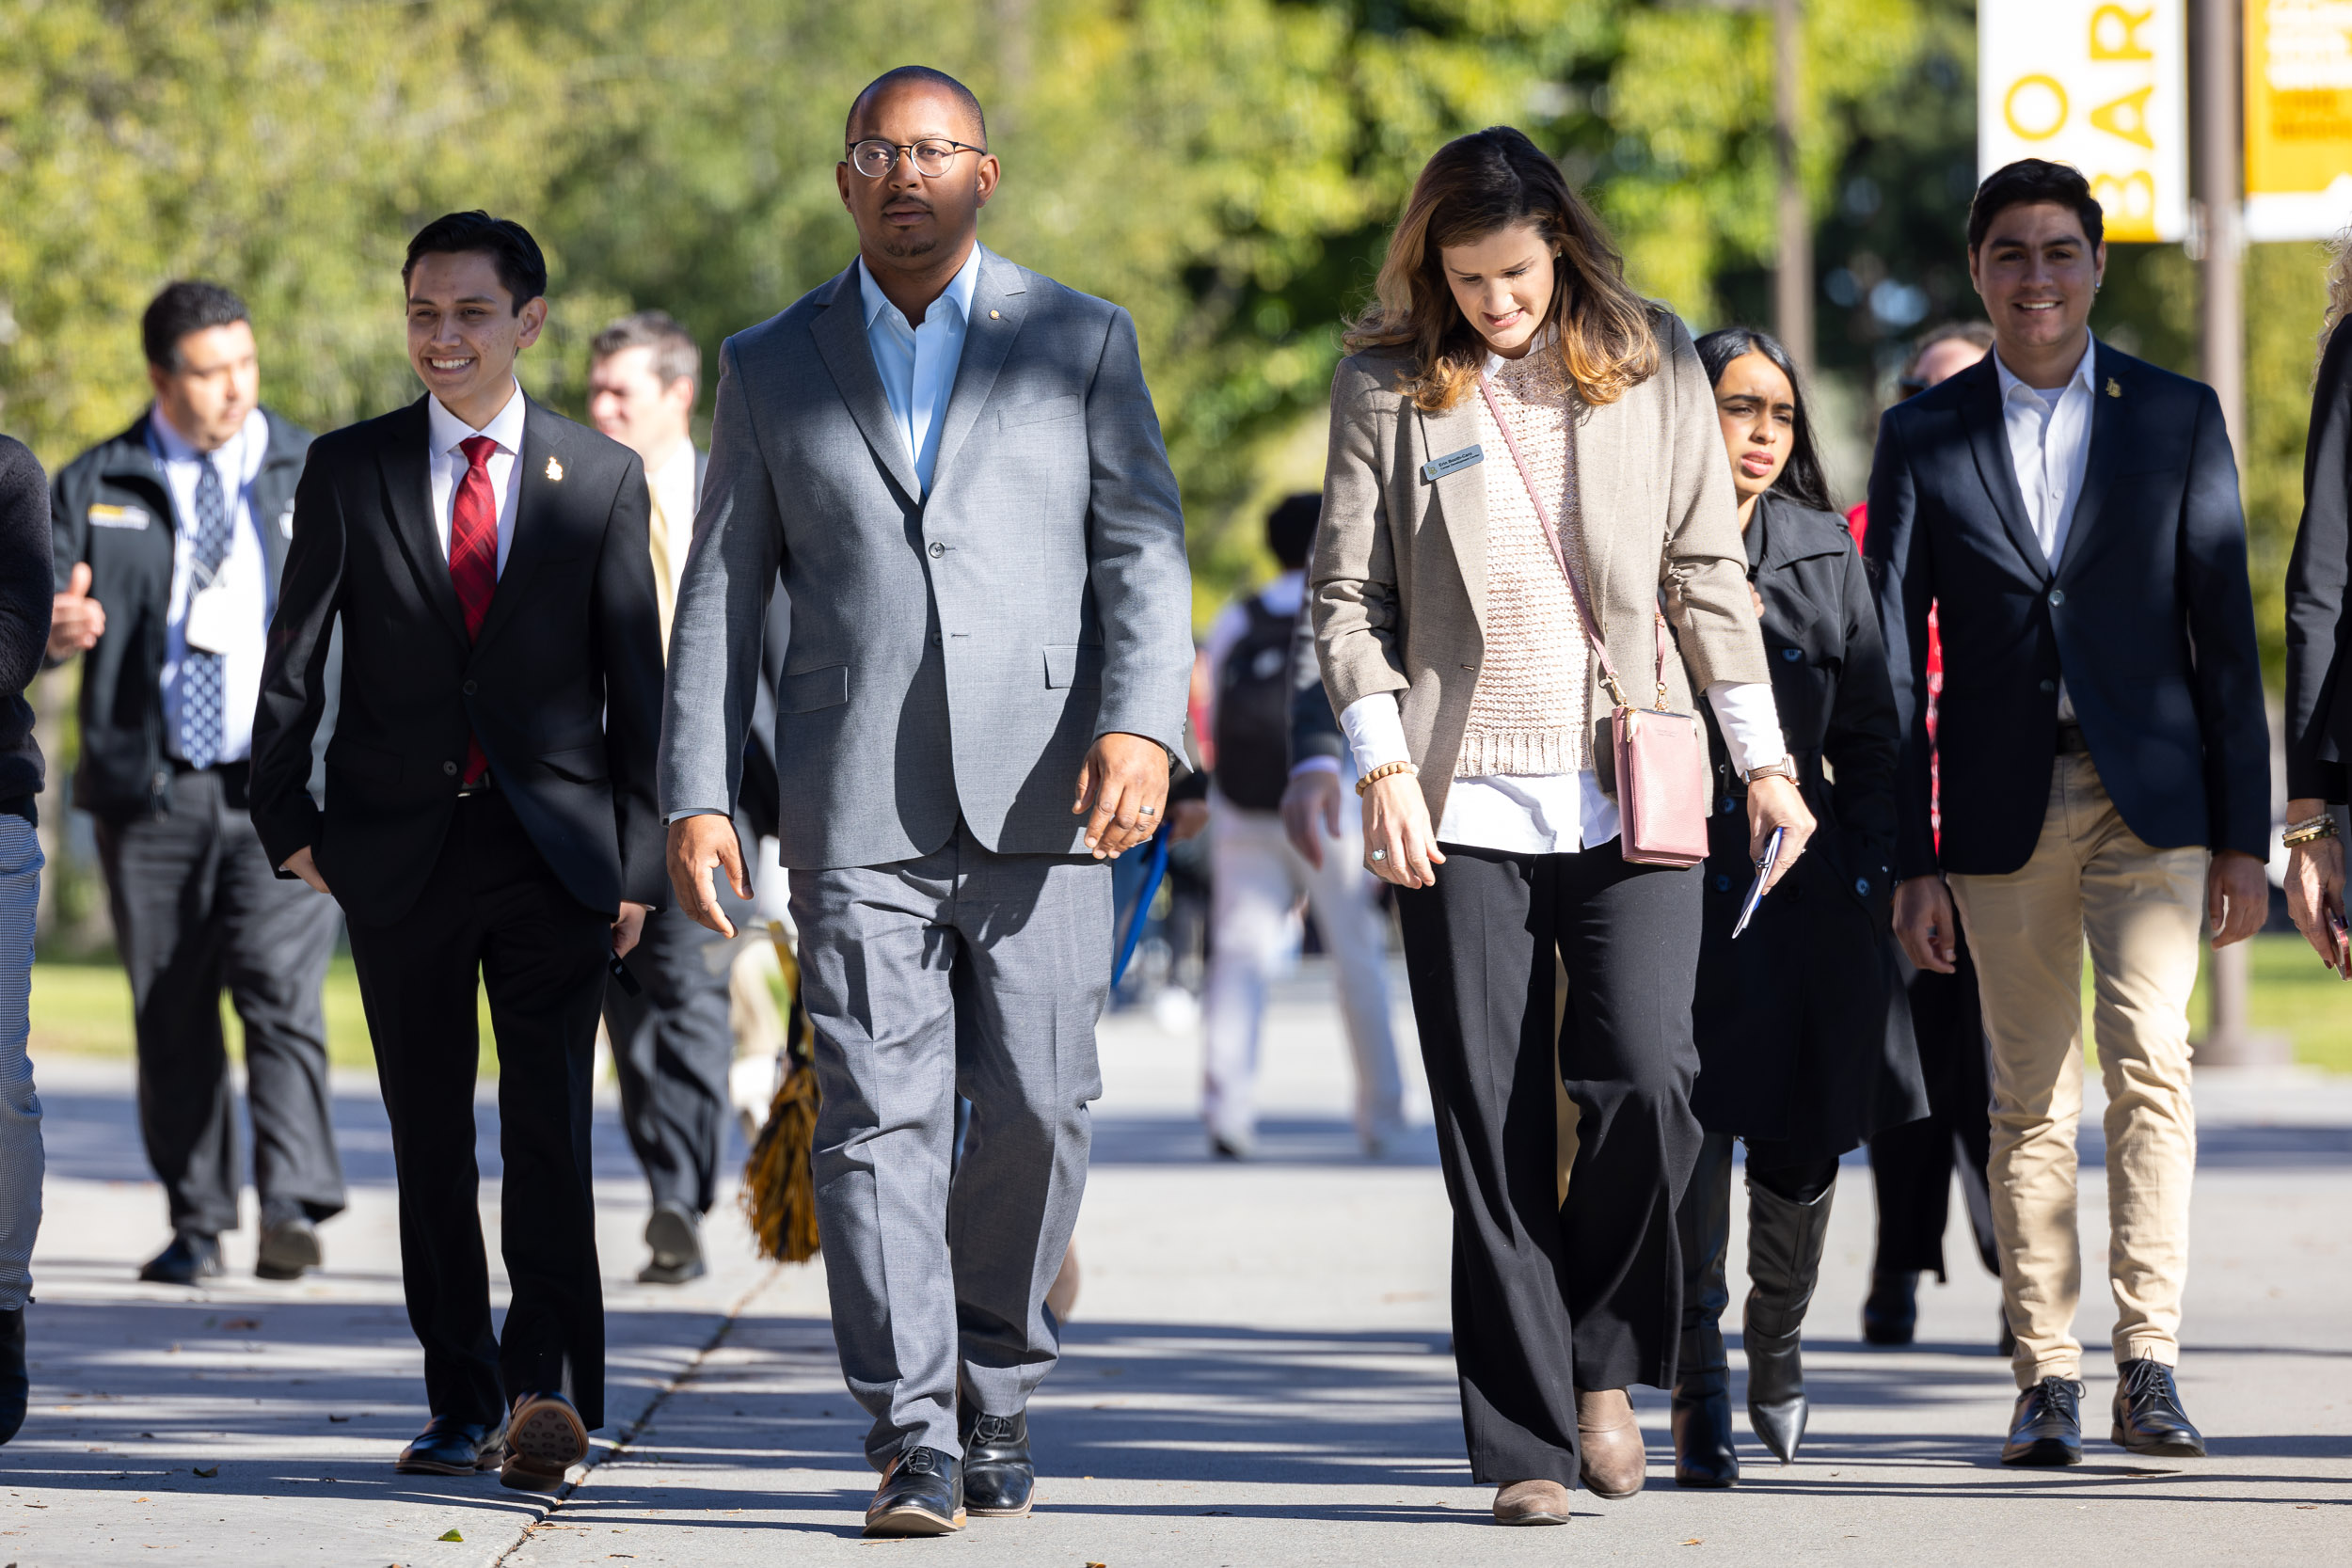 Mayor Rex Richardson walks across campus with students